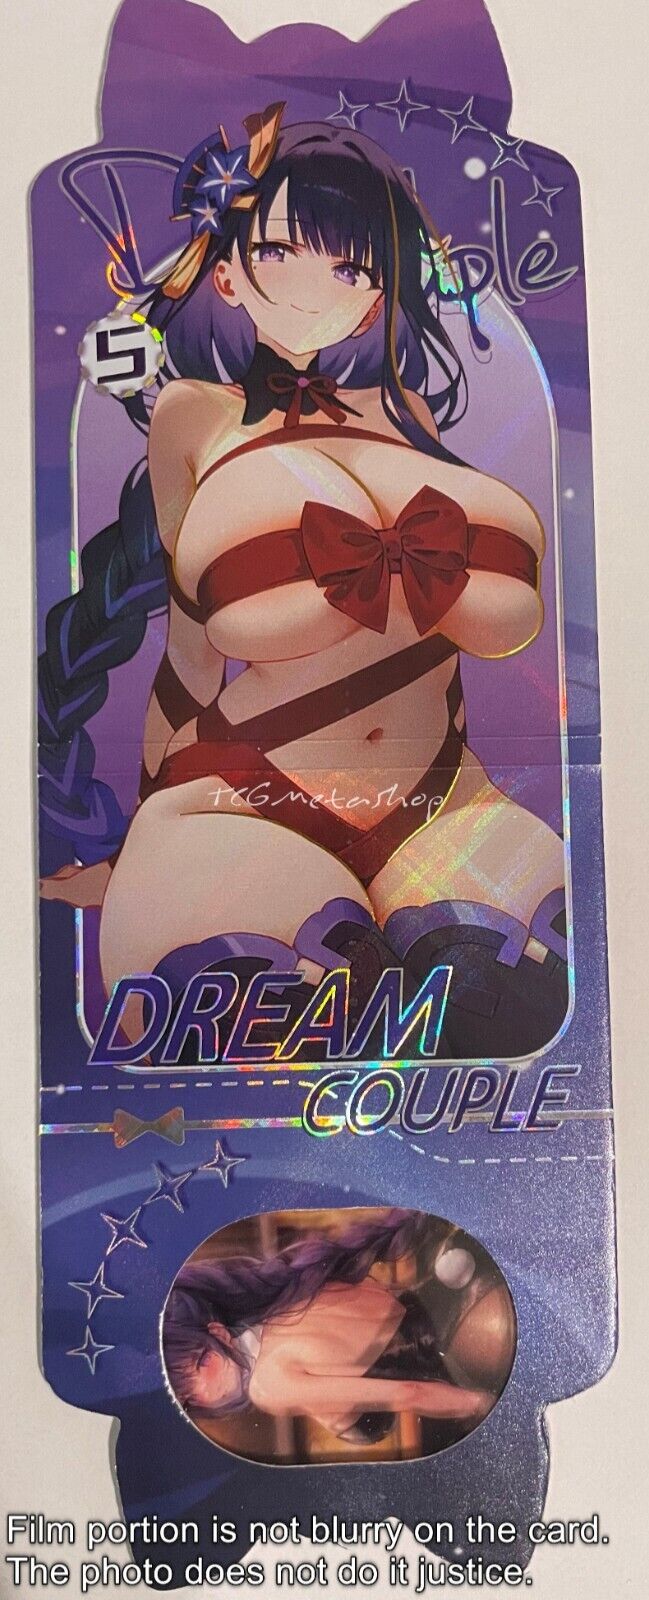 🔥Raiden Shogun Genshin Impact Dream Couple 5 Goddess Story Anime Film Fold Card